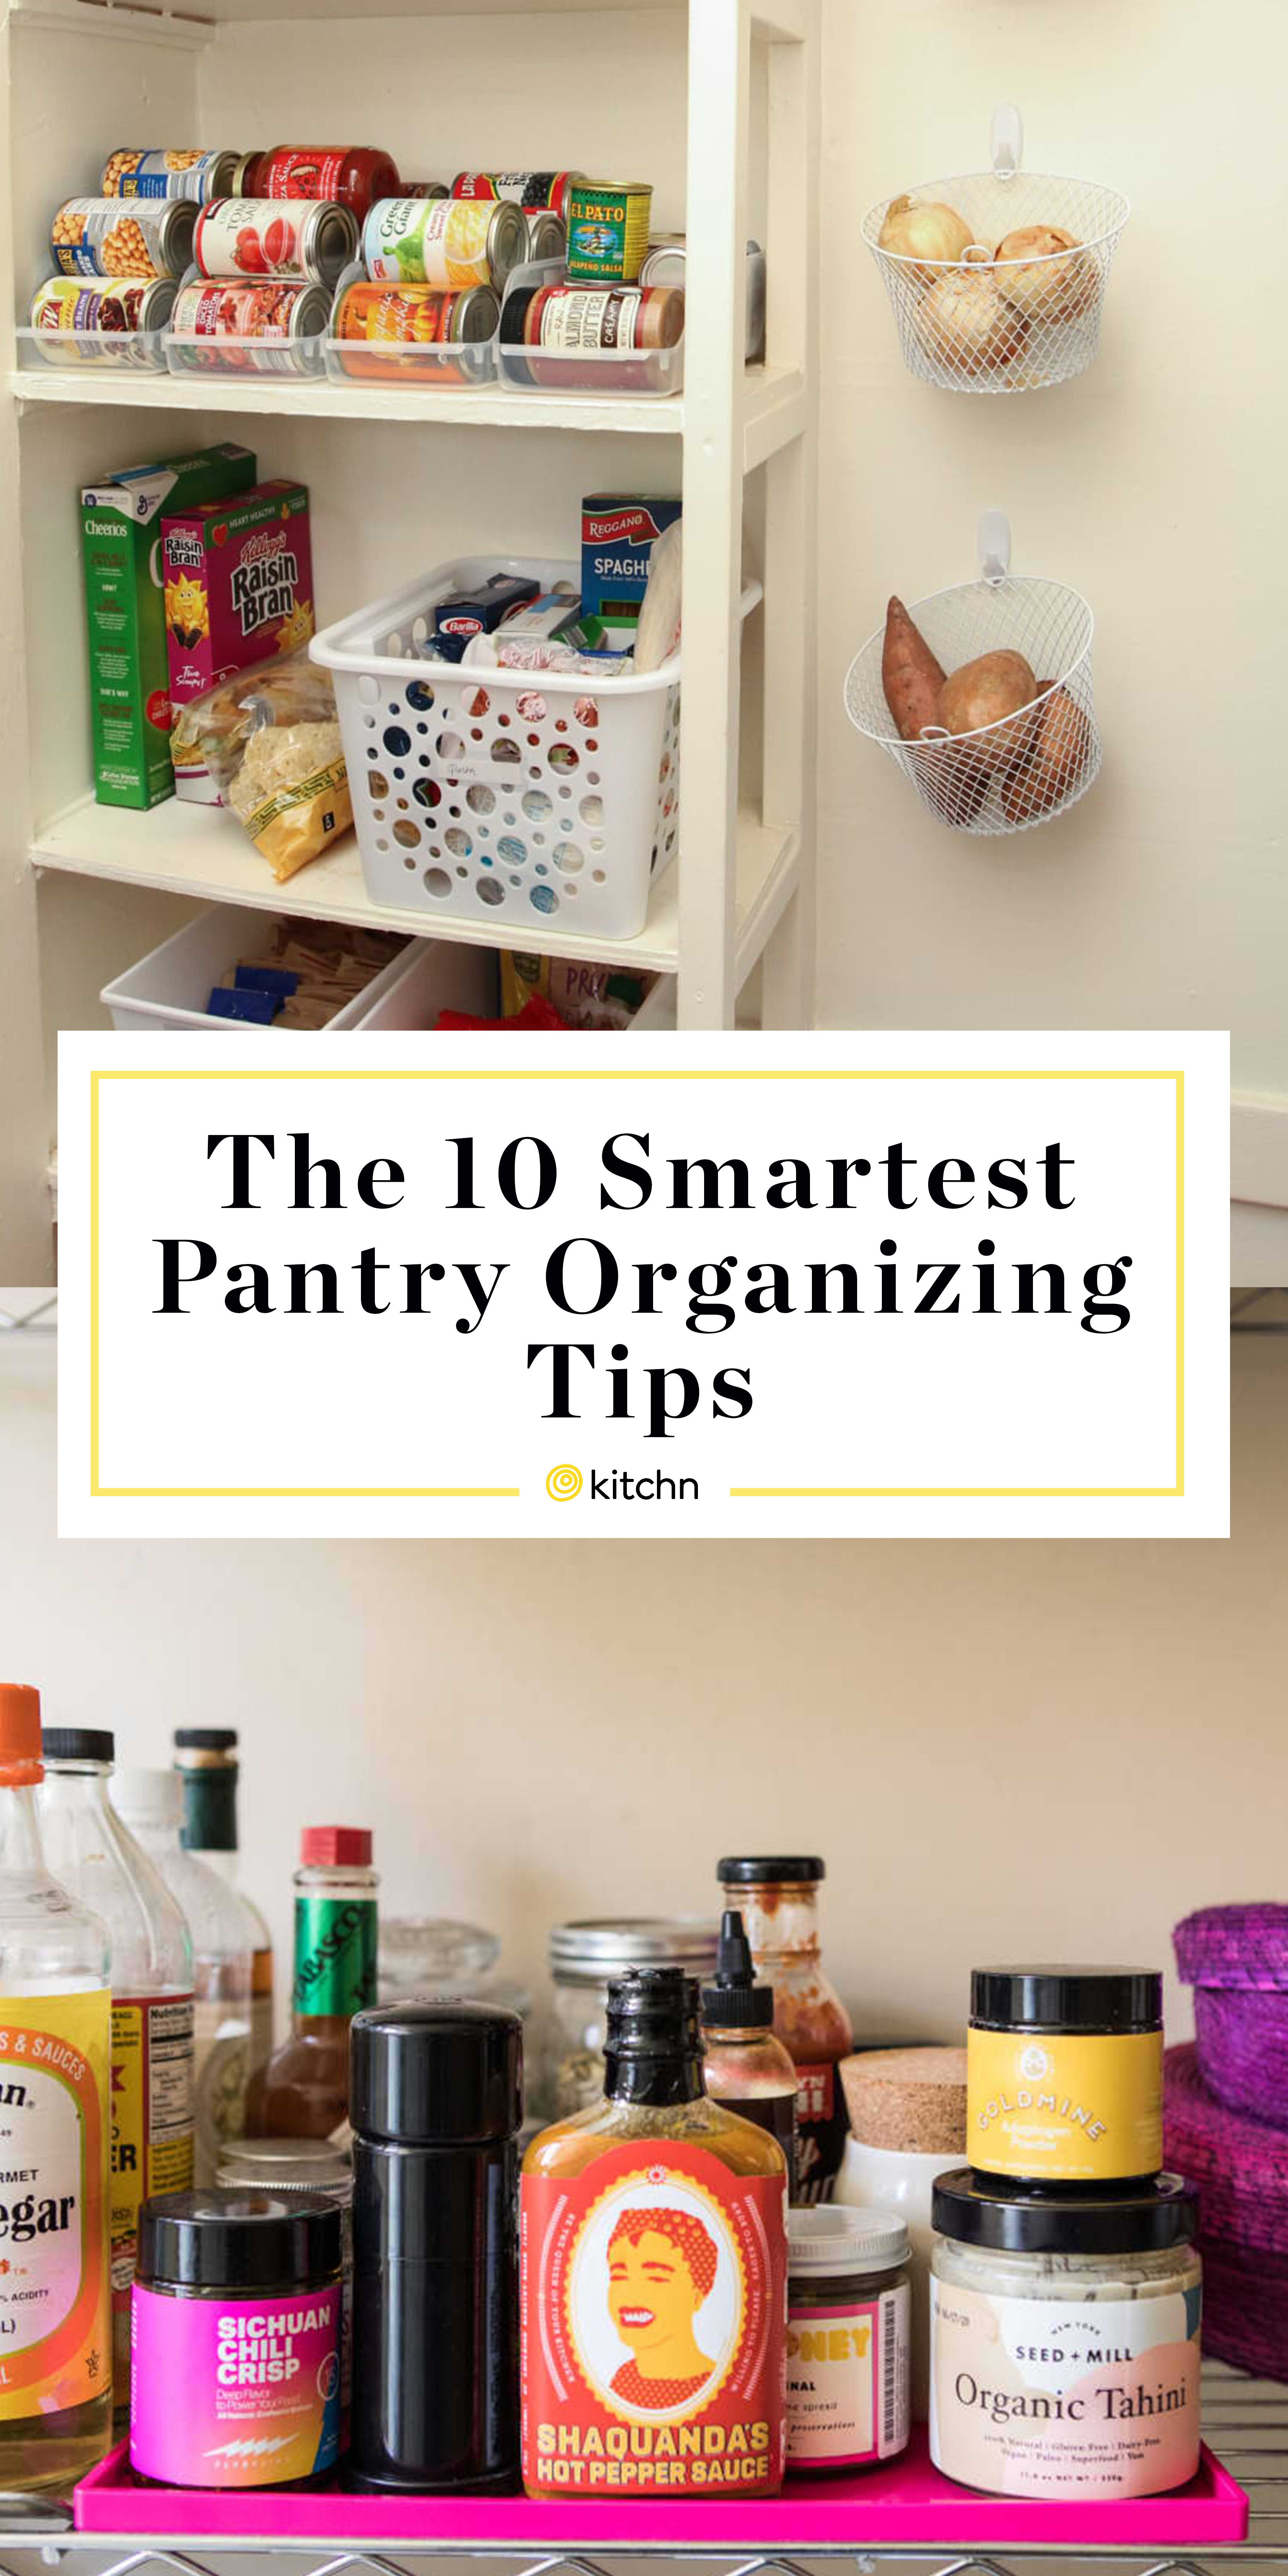 6 Kitchen Pantry Organization & Storage Ideas to Try - %%sitename%%